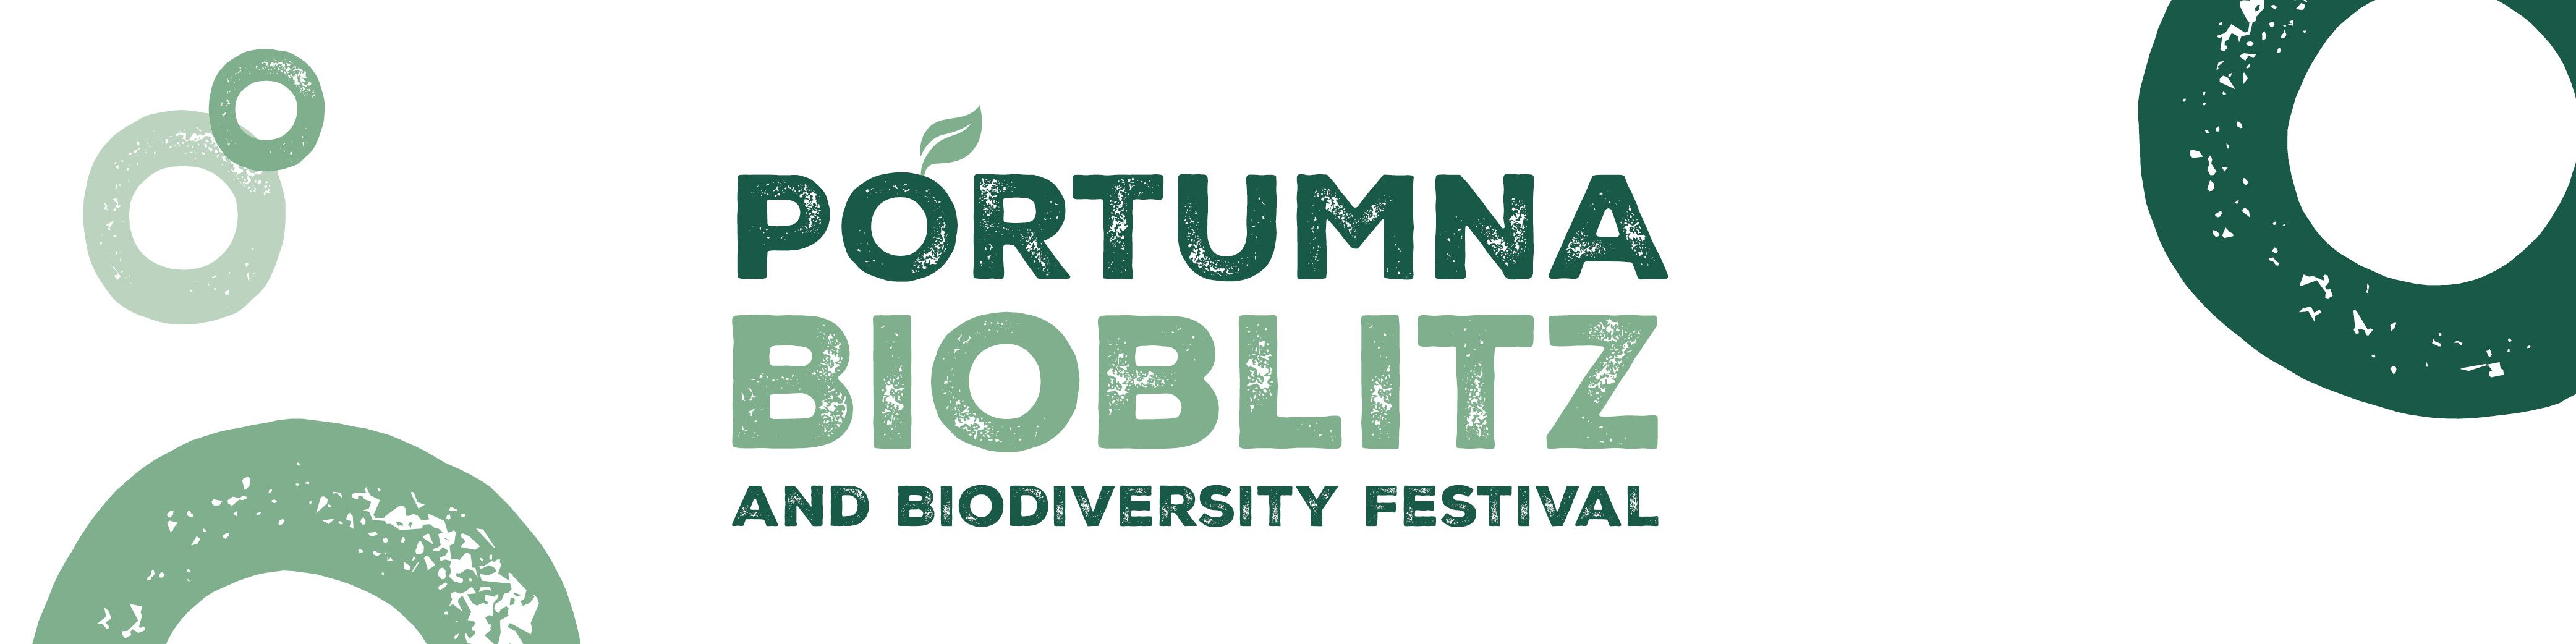 Portumna Bioblitz website banner